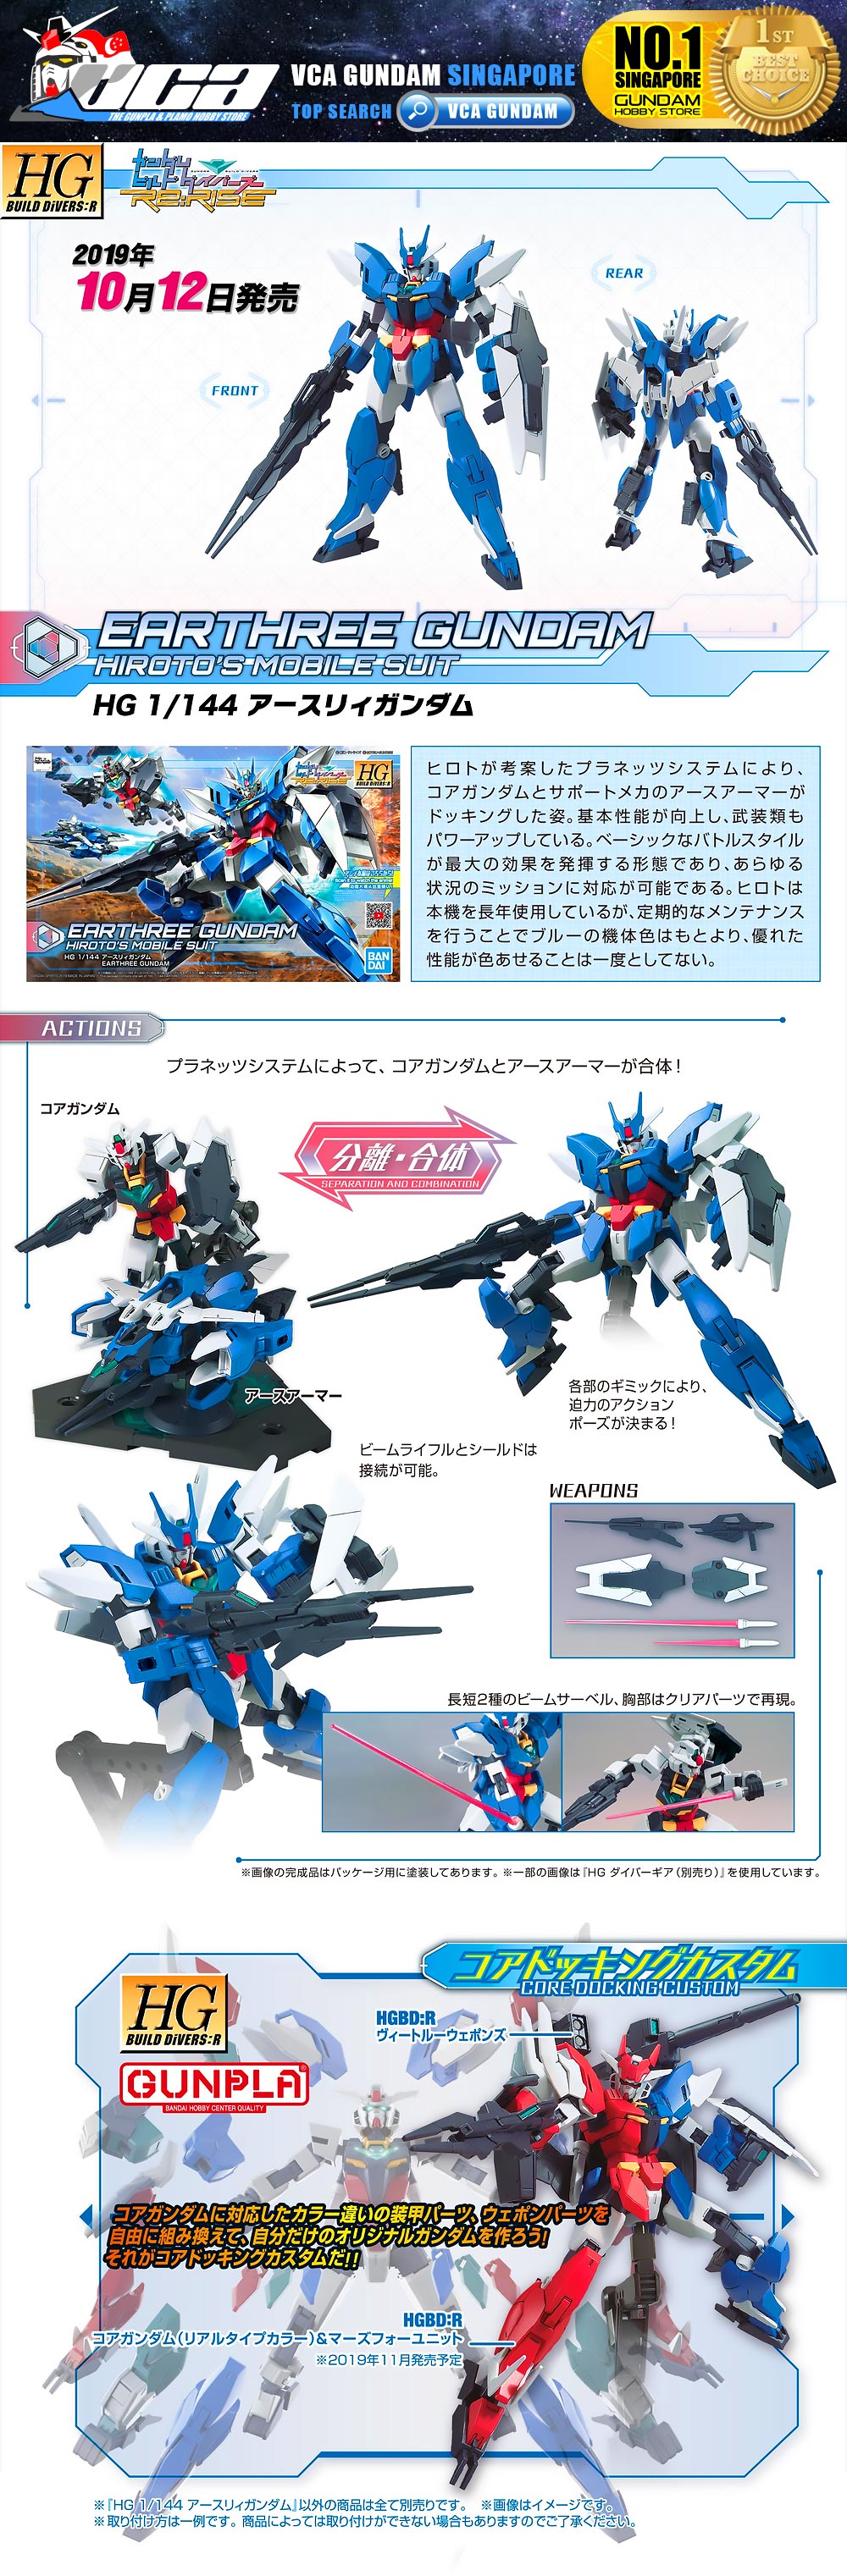 Bandai Gunpla High Grade 1/144 HG Earthree Gundam Specification